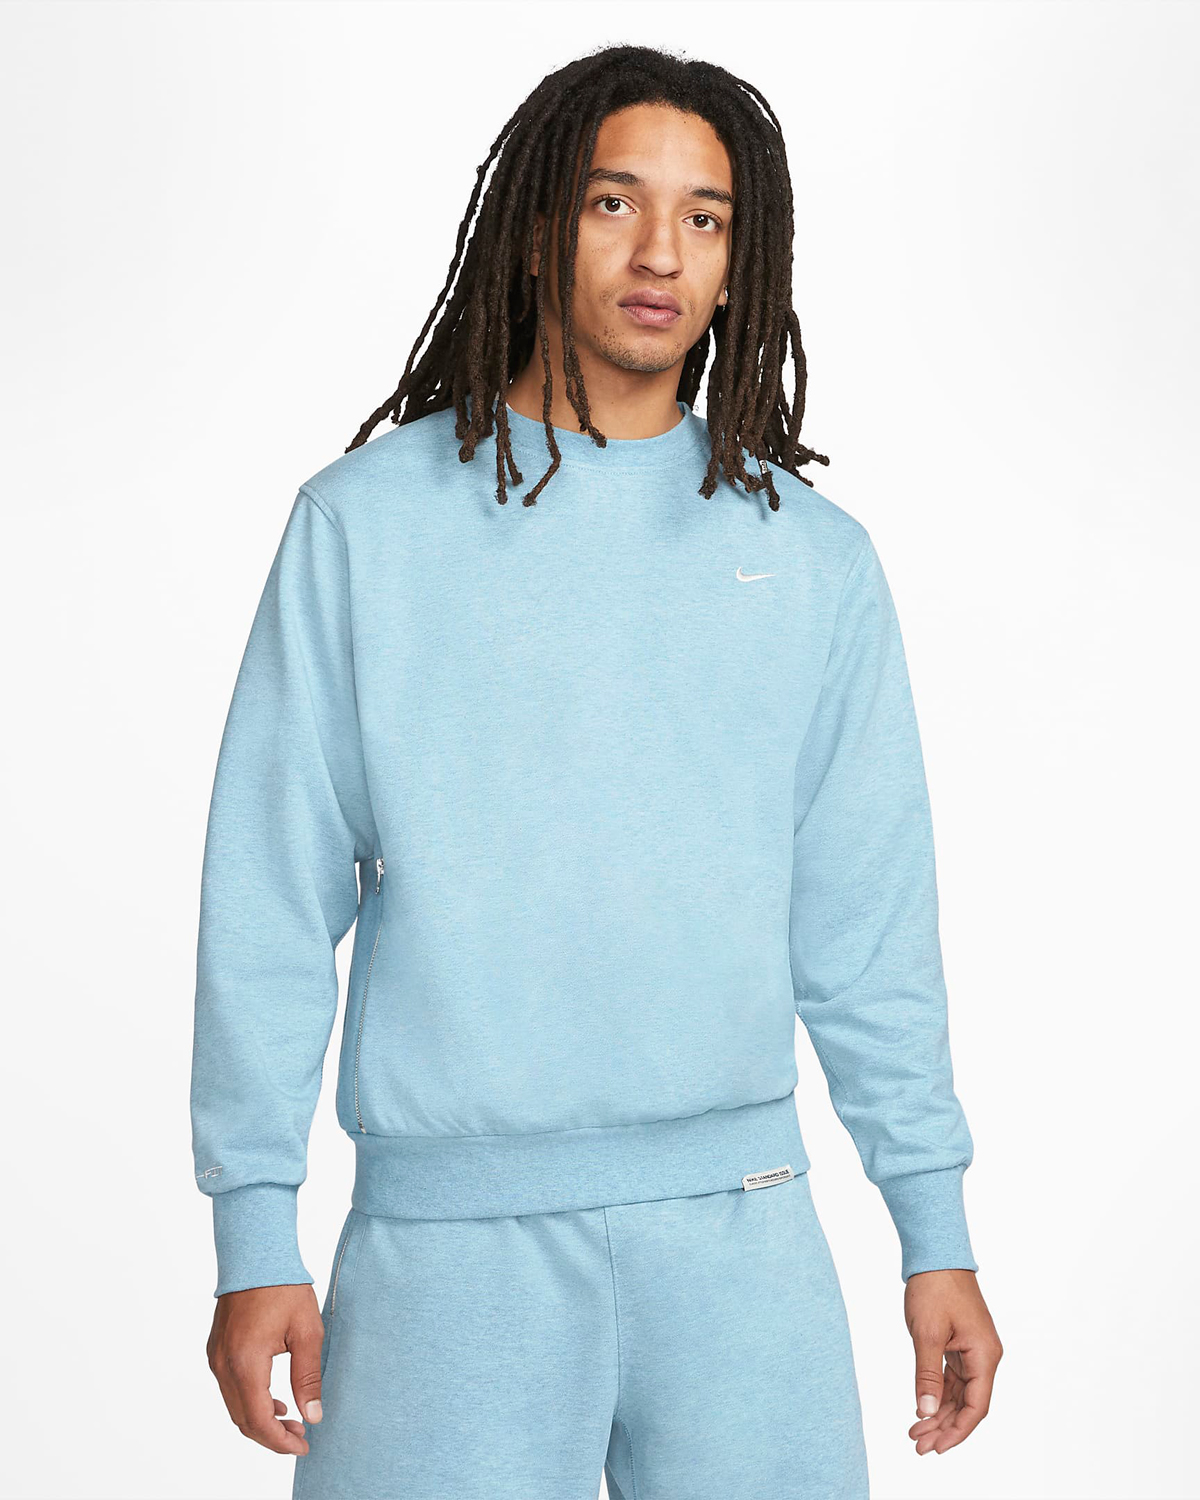 Nike-Standard-Issue-Crew-Sweatshirt-Worn-Blue